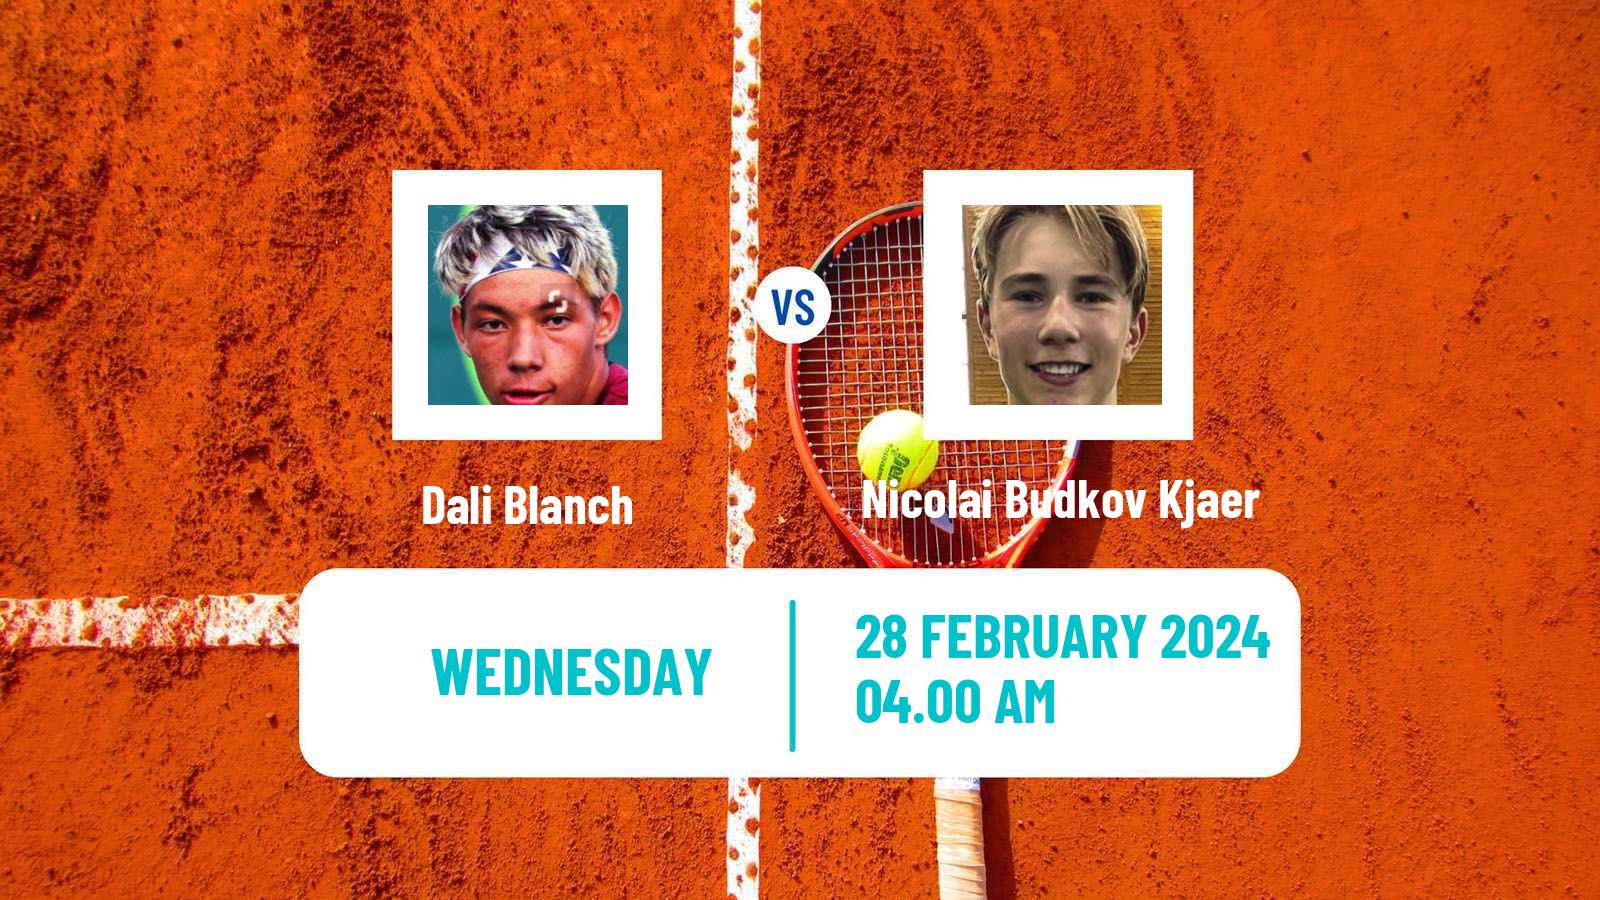 Tennis ITF M15 Villena 2 Men Dali Blanch - Nicolai Budkov Kjaer